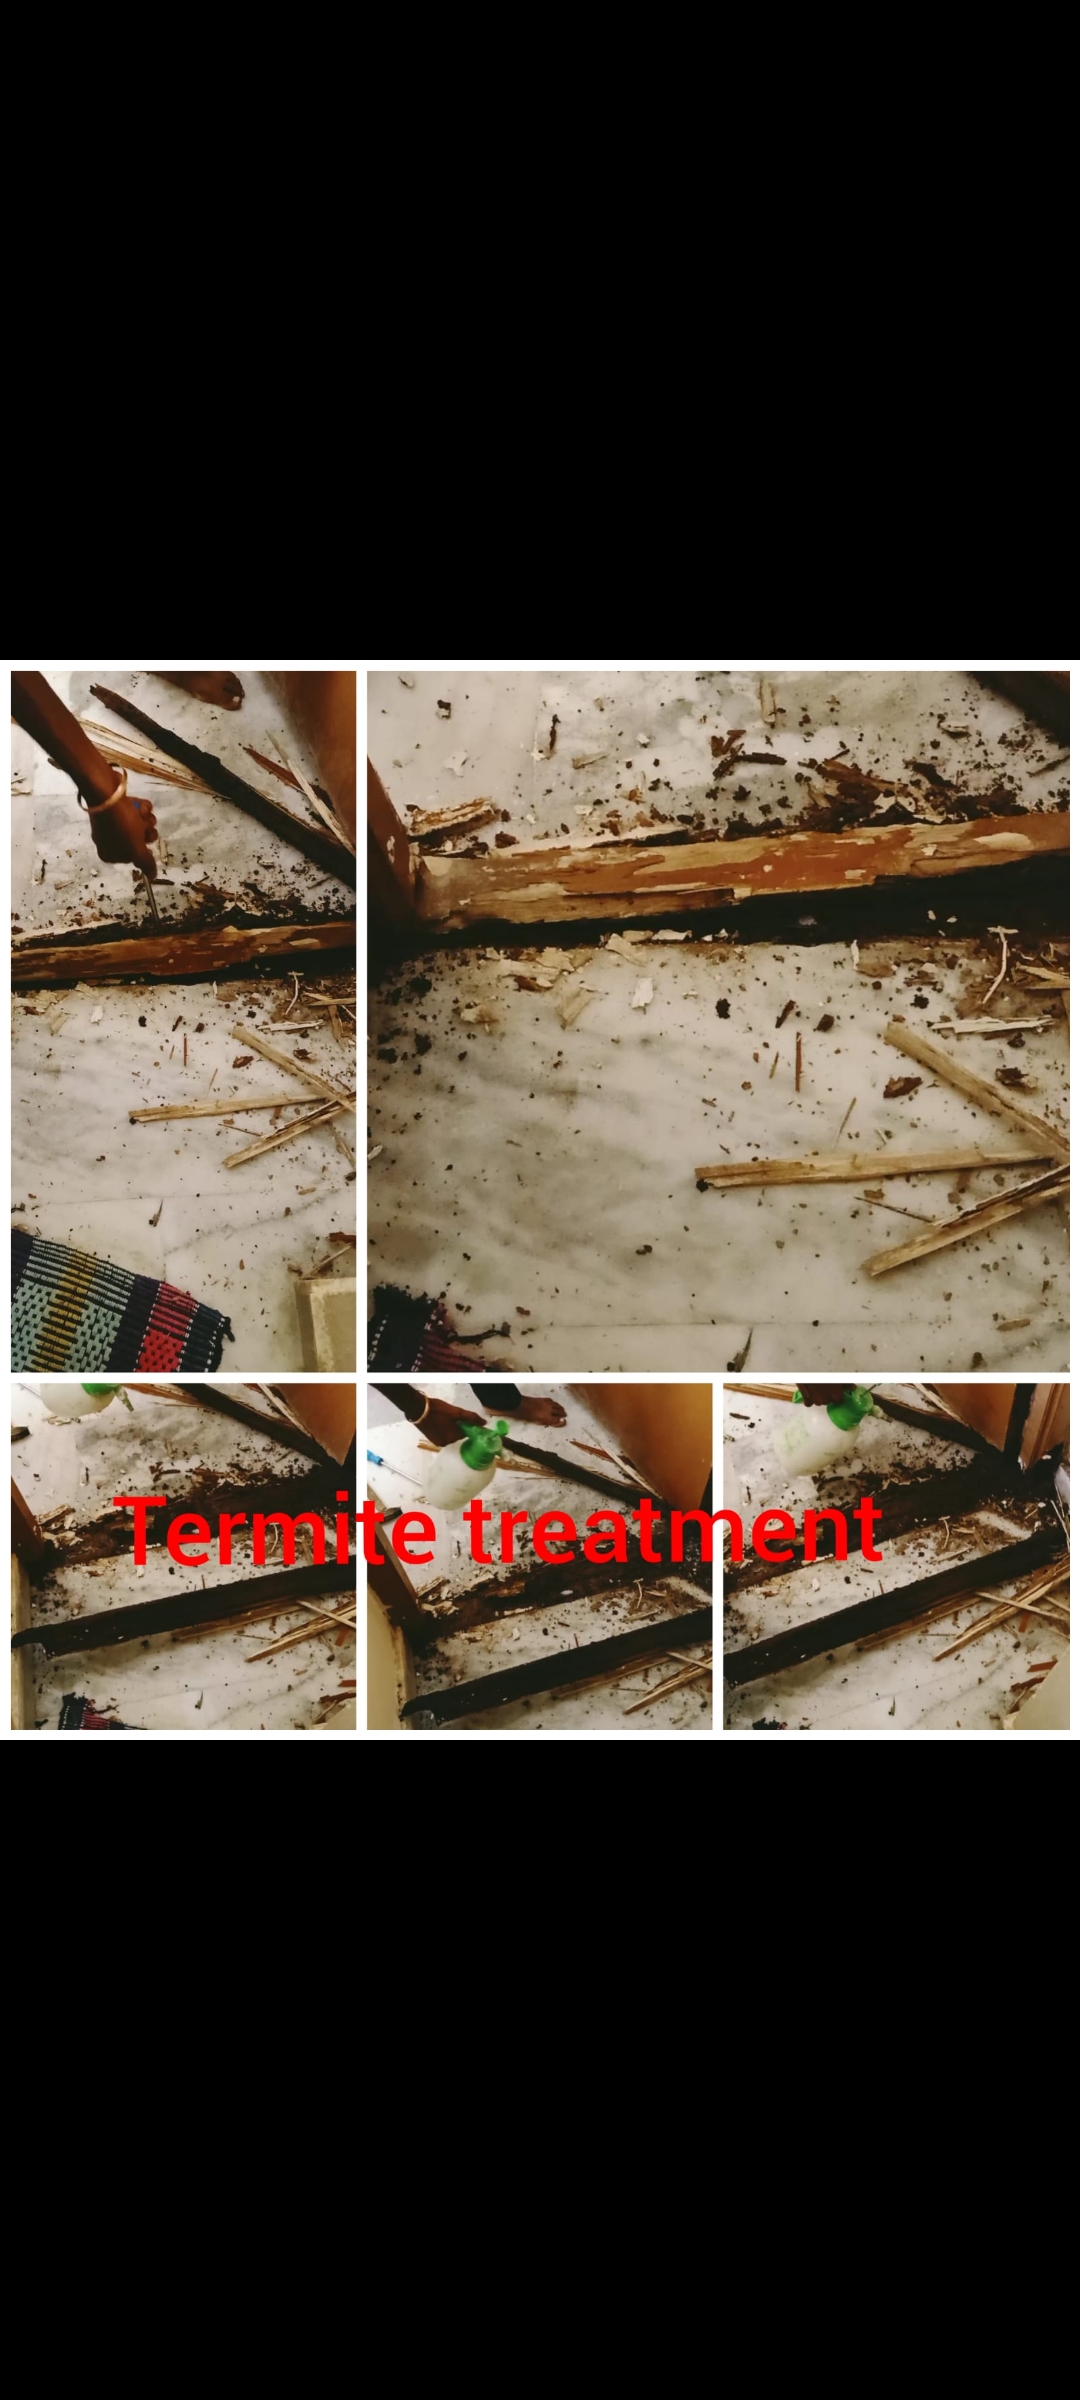 Termite treatment